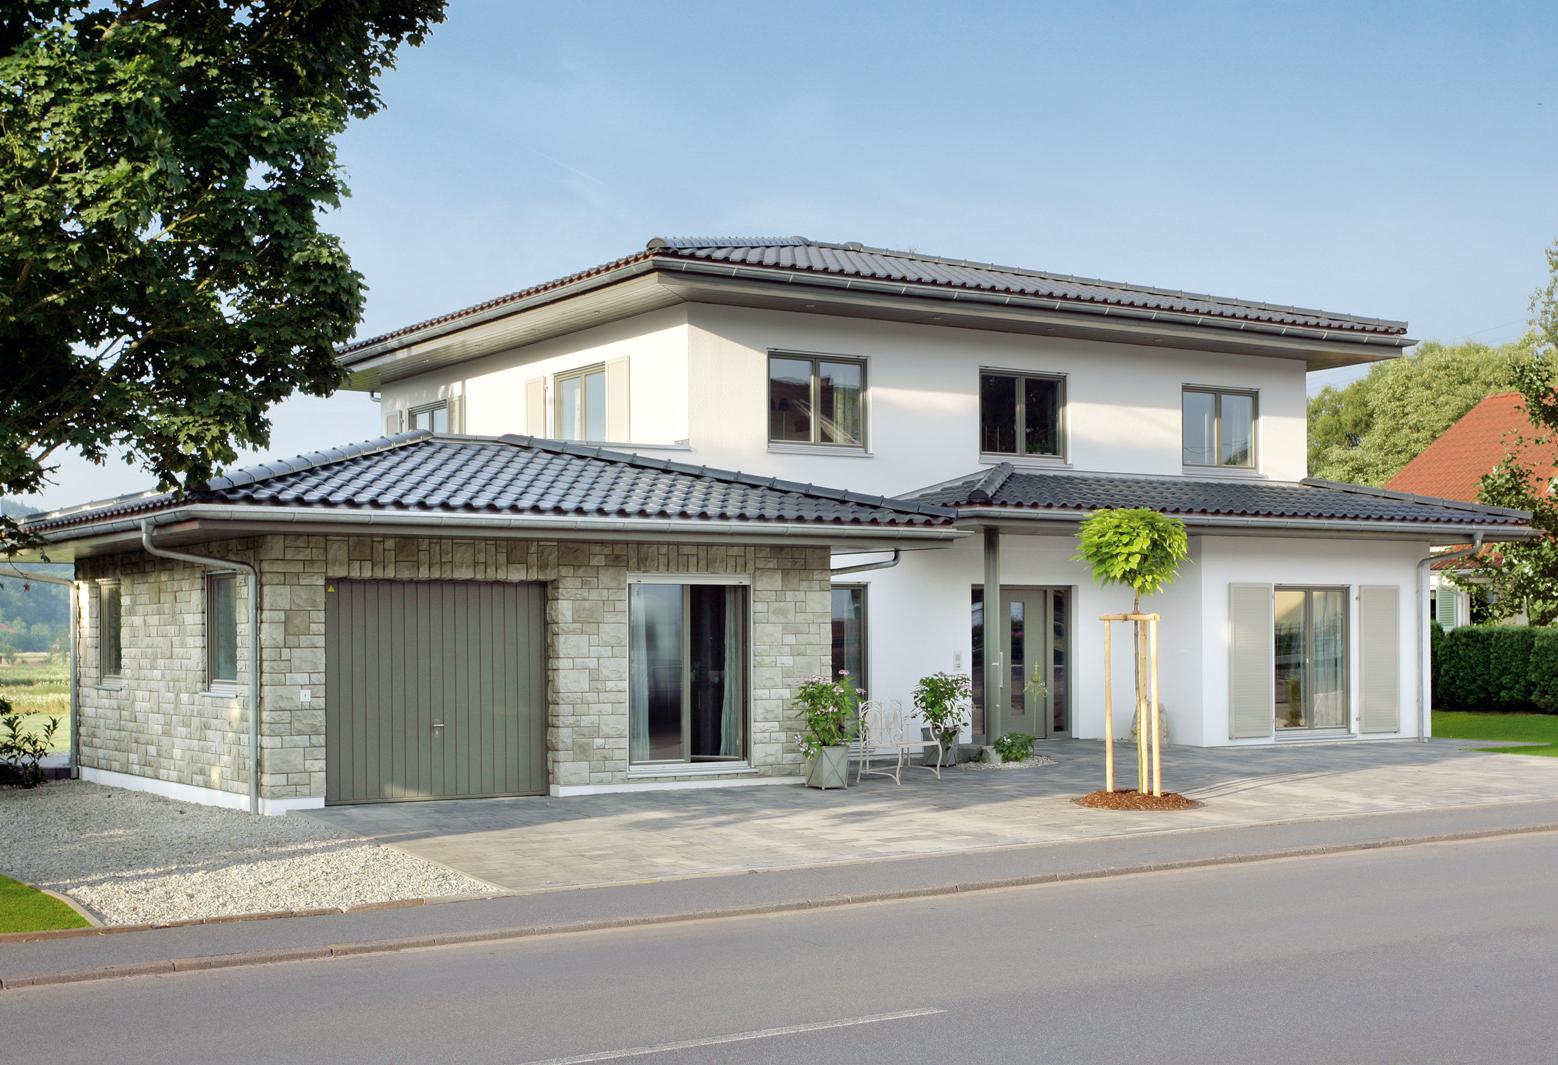 Villa de campagne avec garage avec façade en pierre